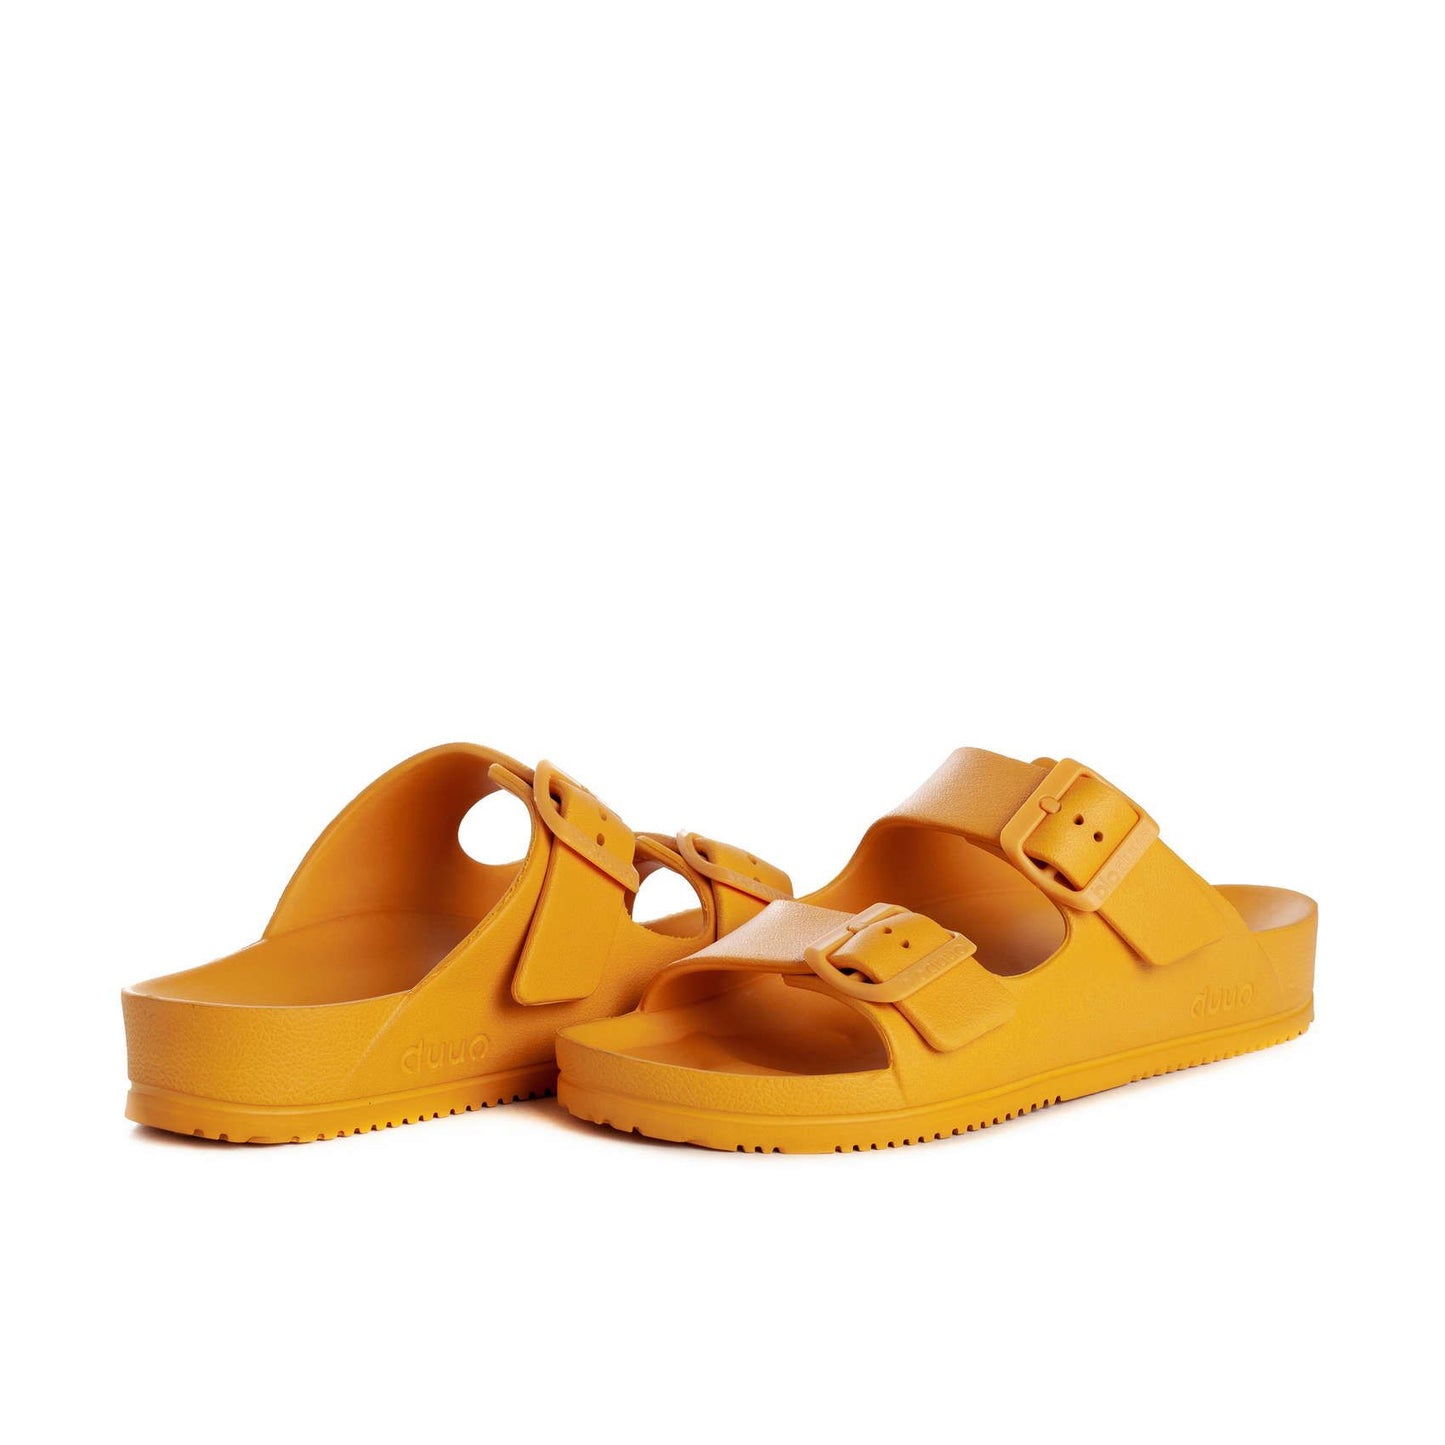 Sandalias De La Marca Duuo Para Mujer Modelo Bio Eva Tropical Naranja En Color Naranja